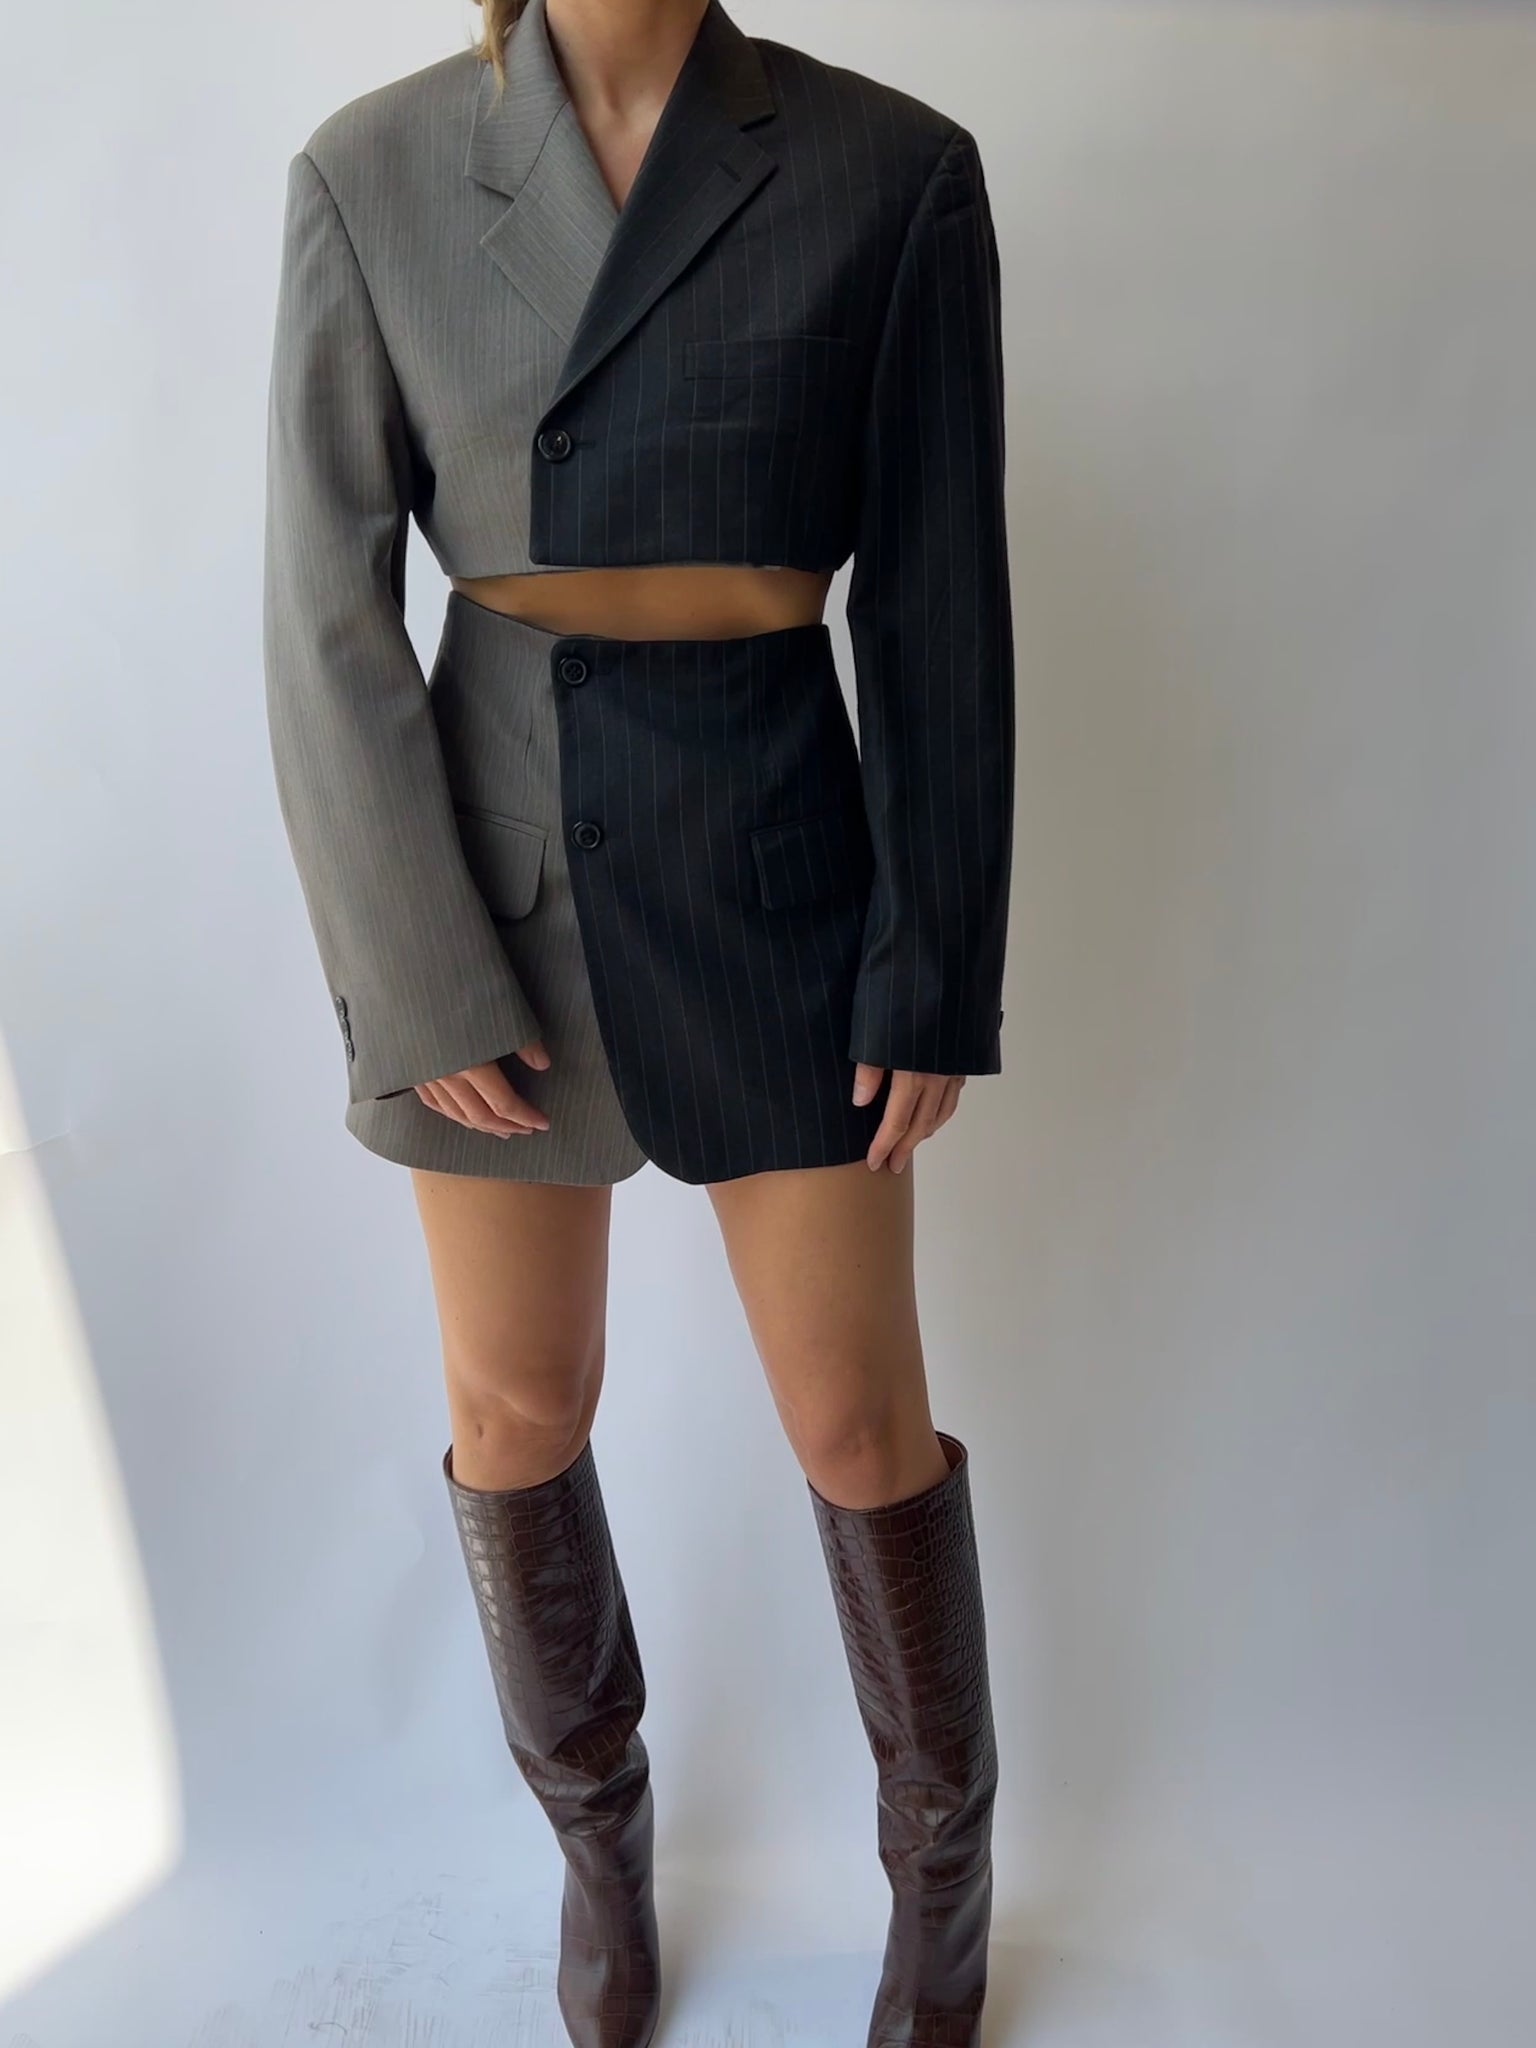 Pale grey and dark grey pinstriped skirt set